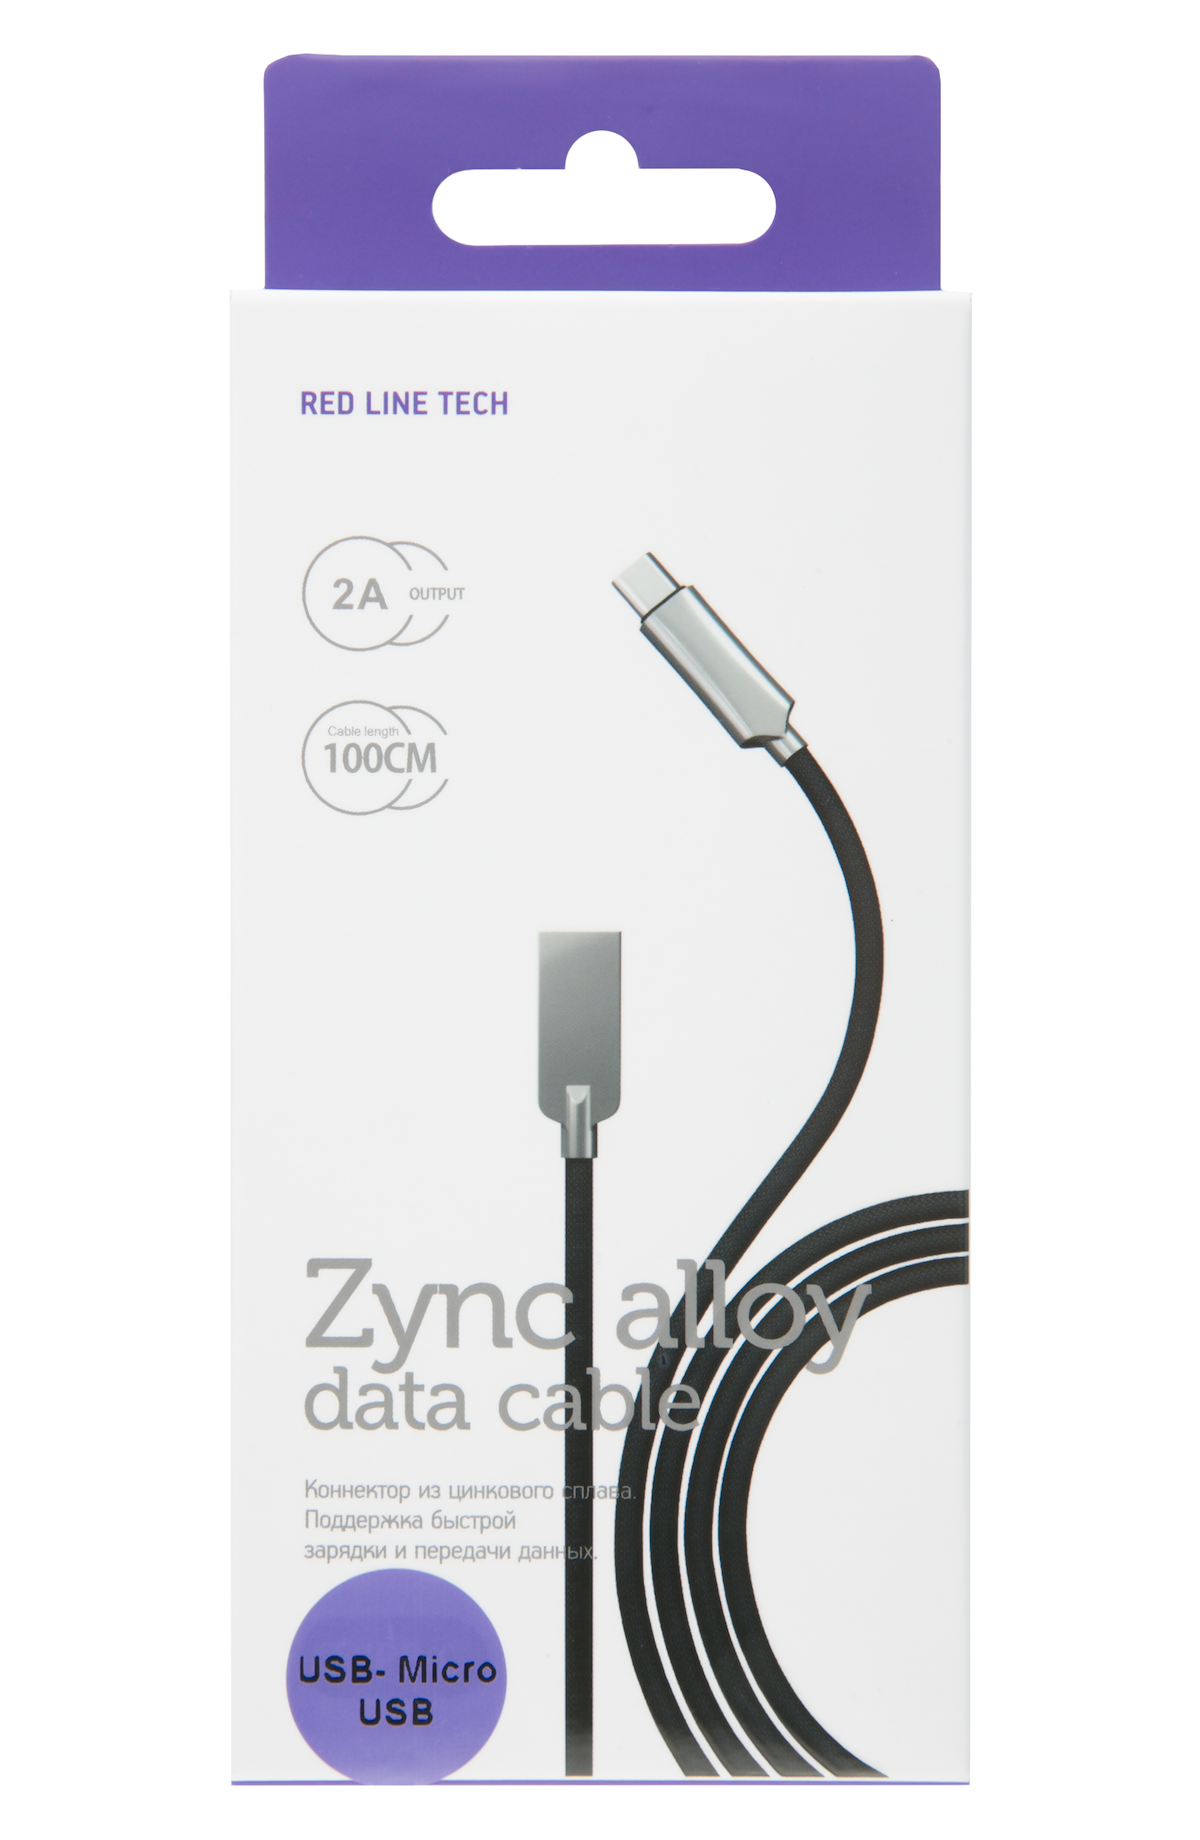 Дата-Кабель Red Line LX13 Zync alloy USB - Micro USB